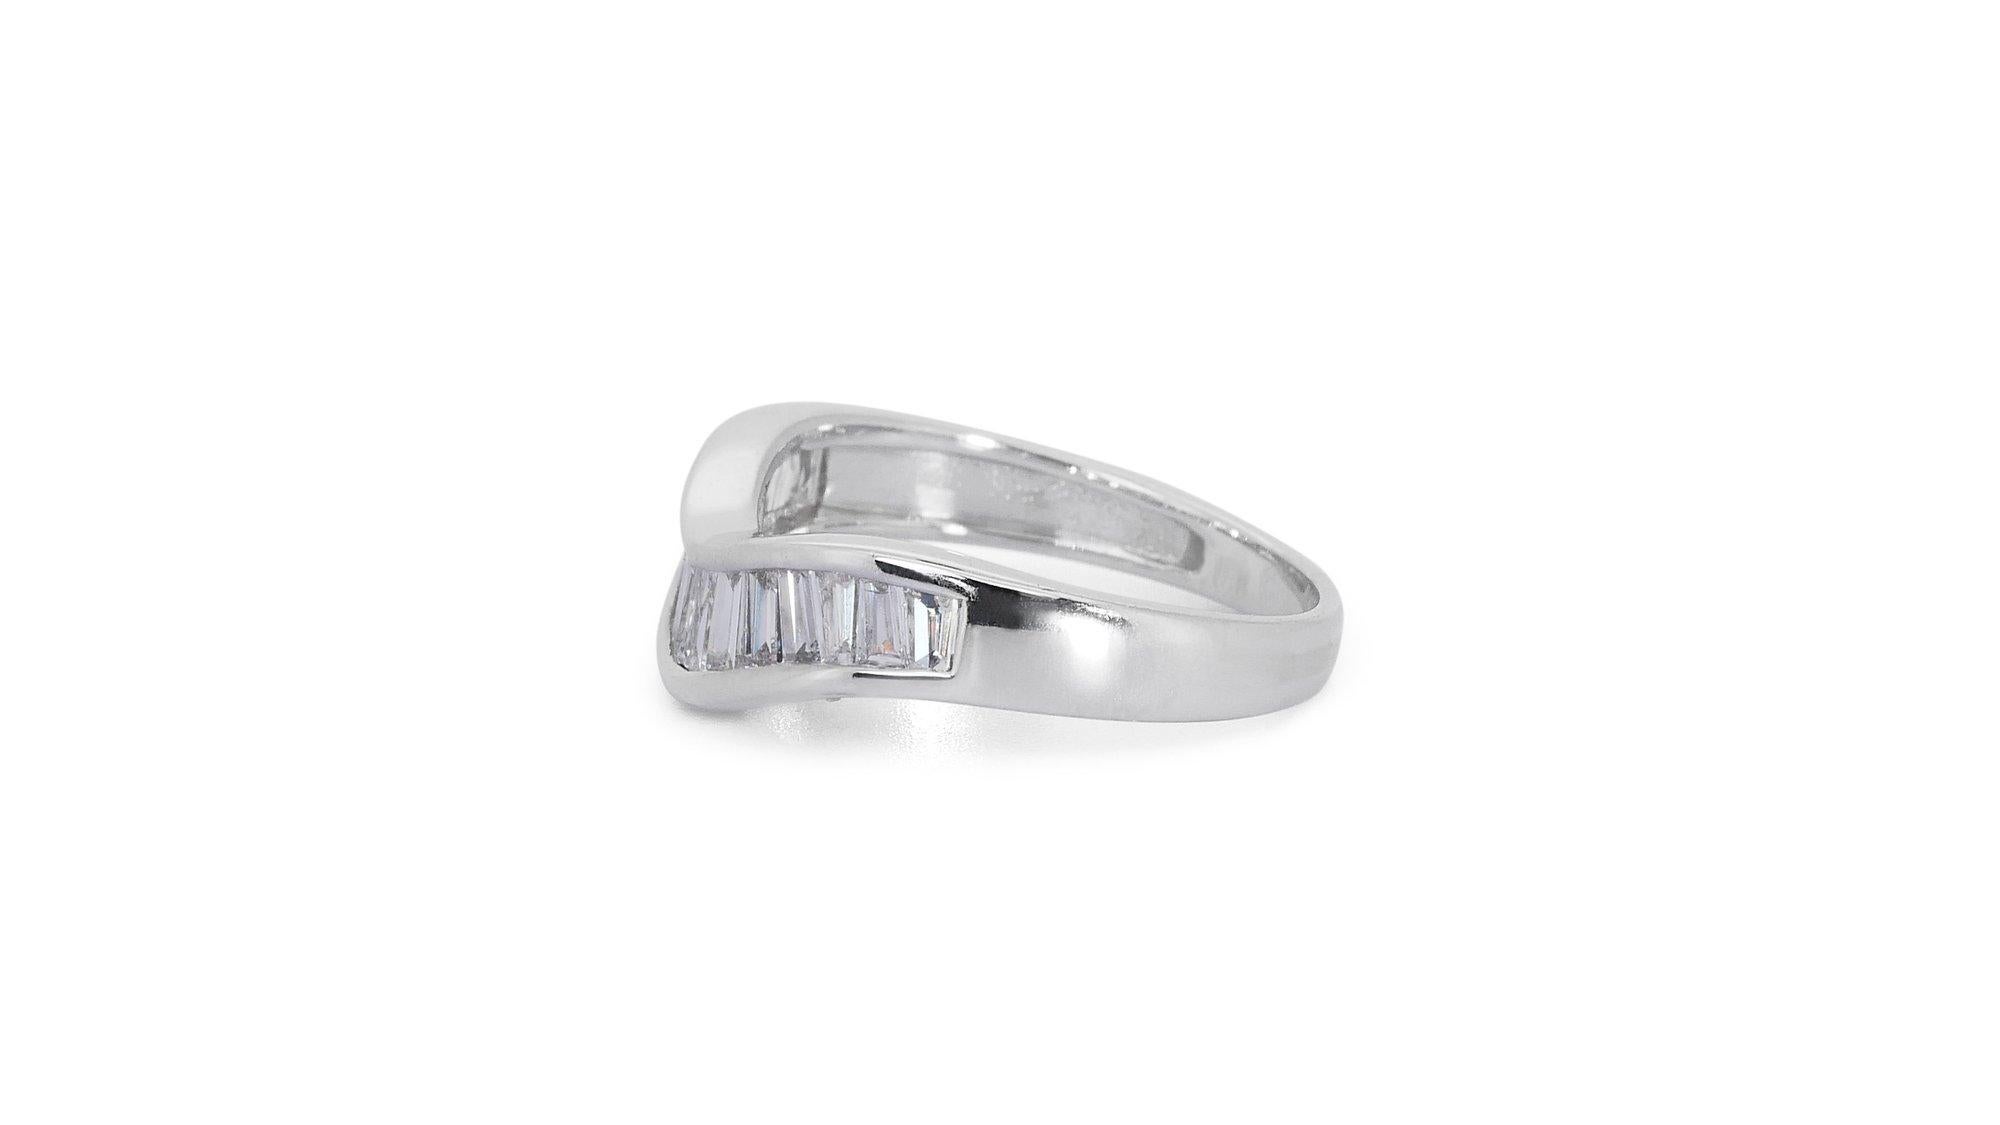 Ravishing 18k White Gold Pave Stack Ring w/ 1.2 ct Natural Diamonds IGI Cert For Sale 2